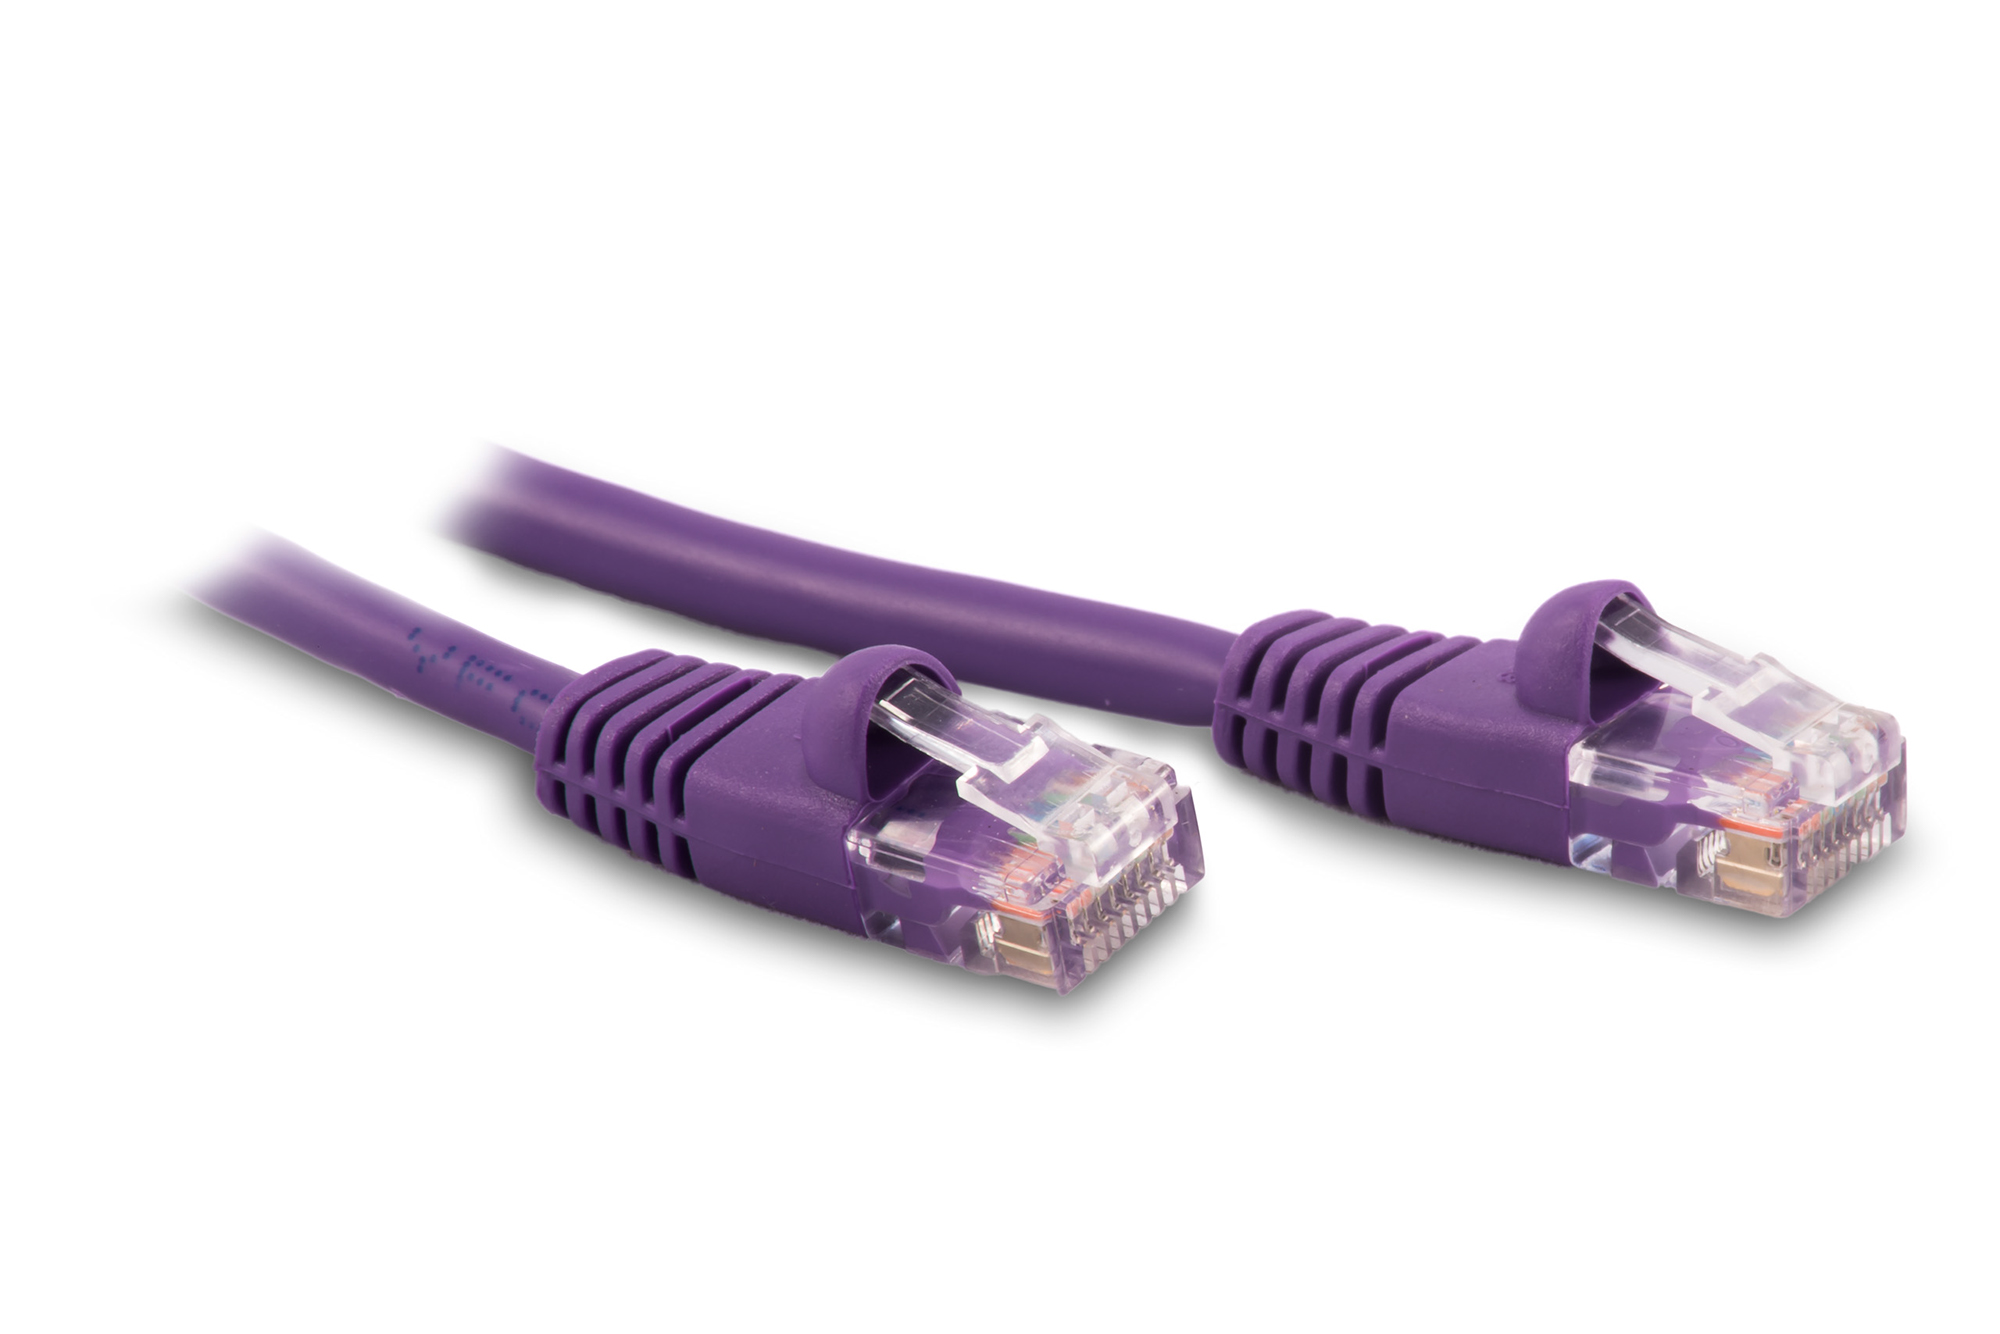 25ft Cat6 Ethernet Patch Cable - Violet Color - Snagless Boot, Stranded, RJ45, 550Mhz, 24AWG